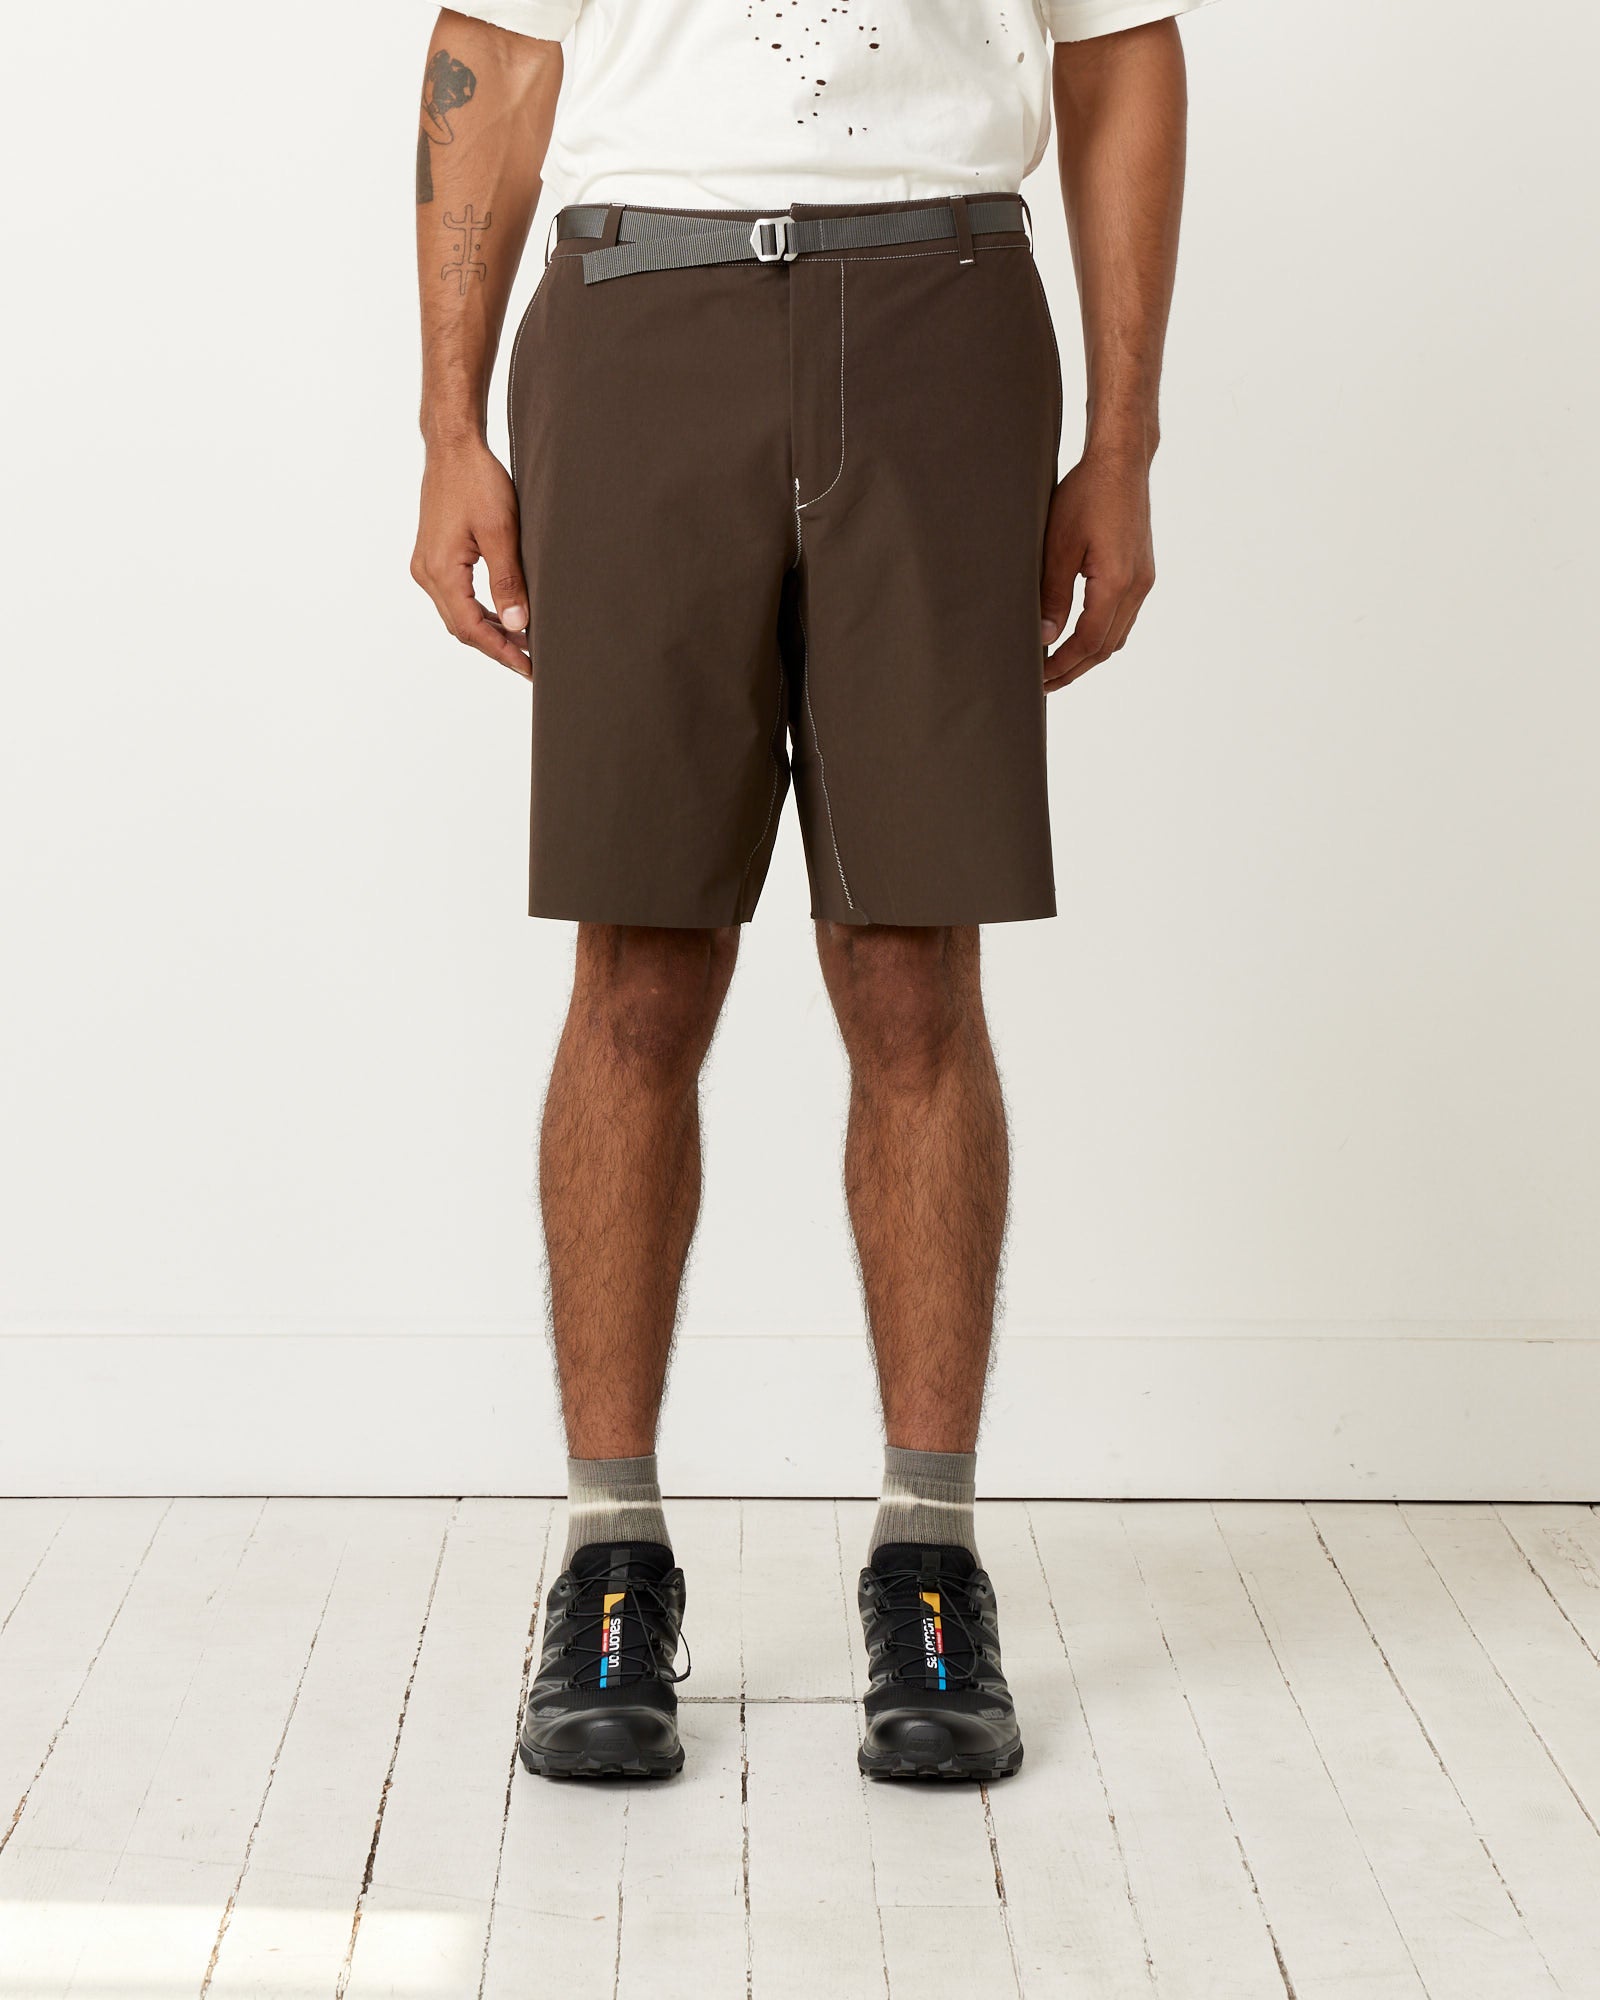 PeaceShell Standard Climb Shorts in Brown